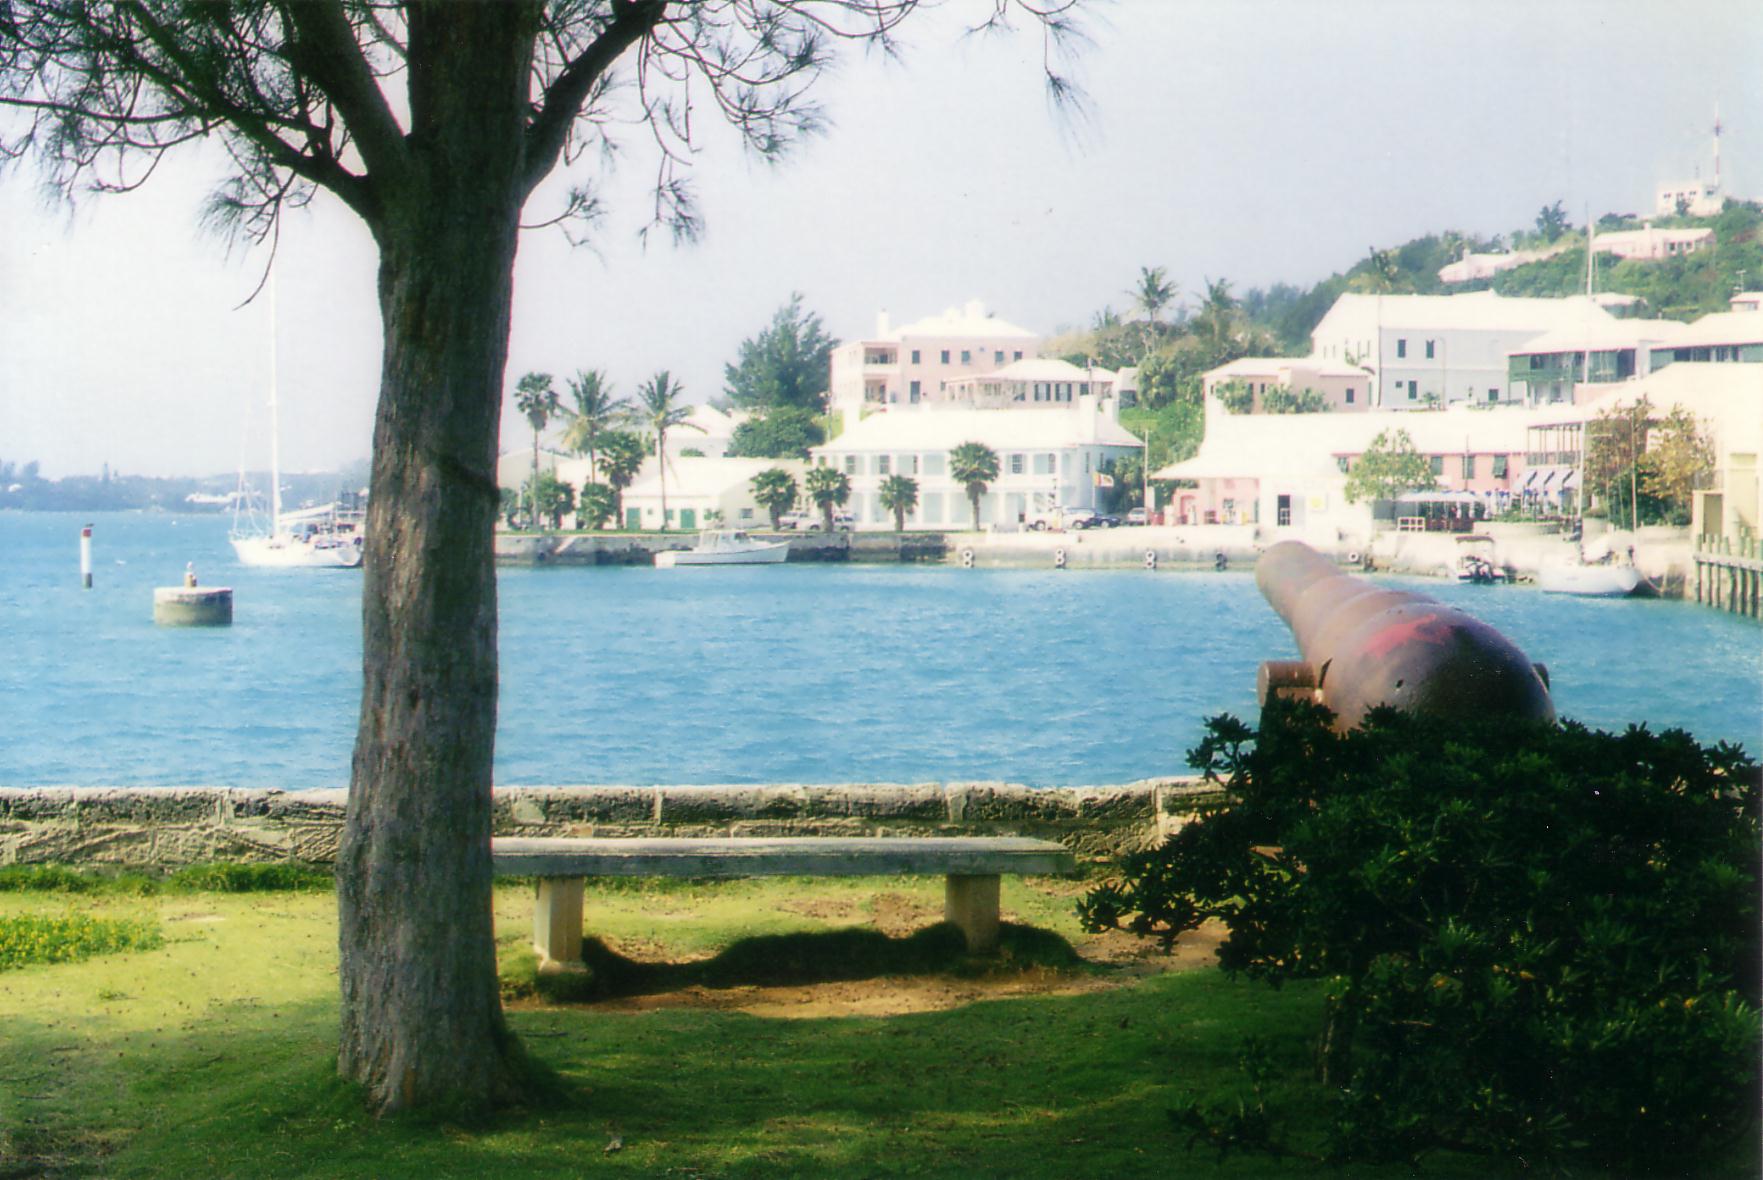 St George's harbour Bermuda